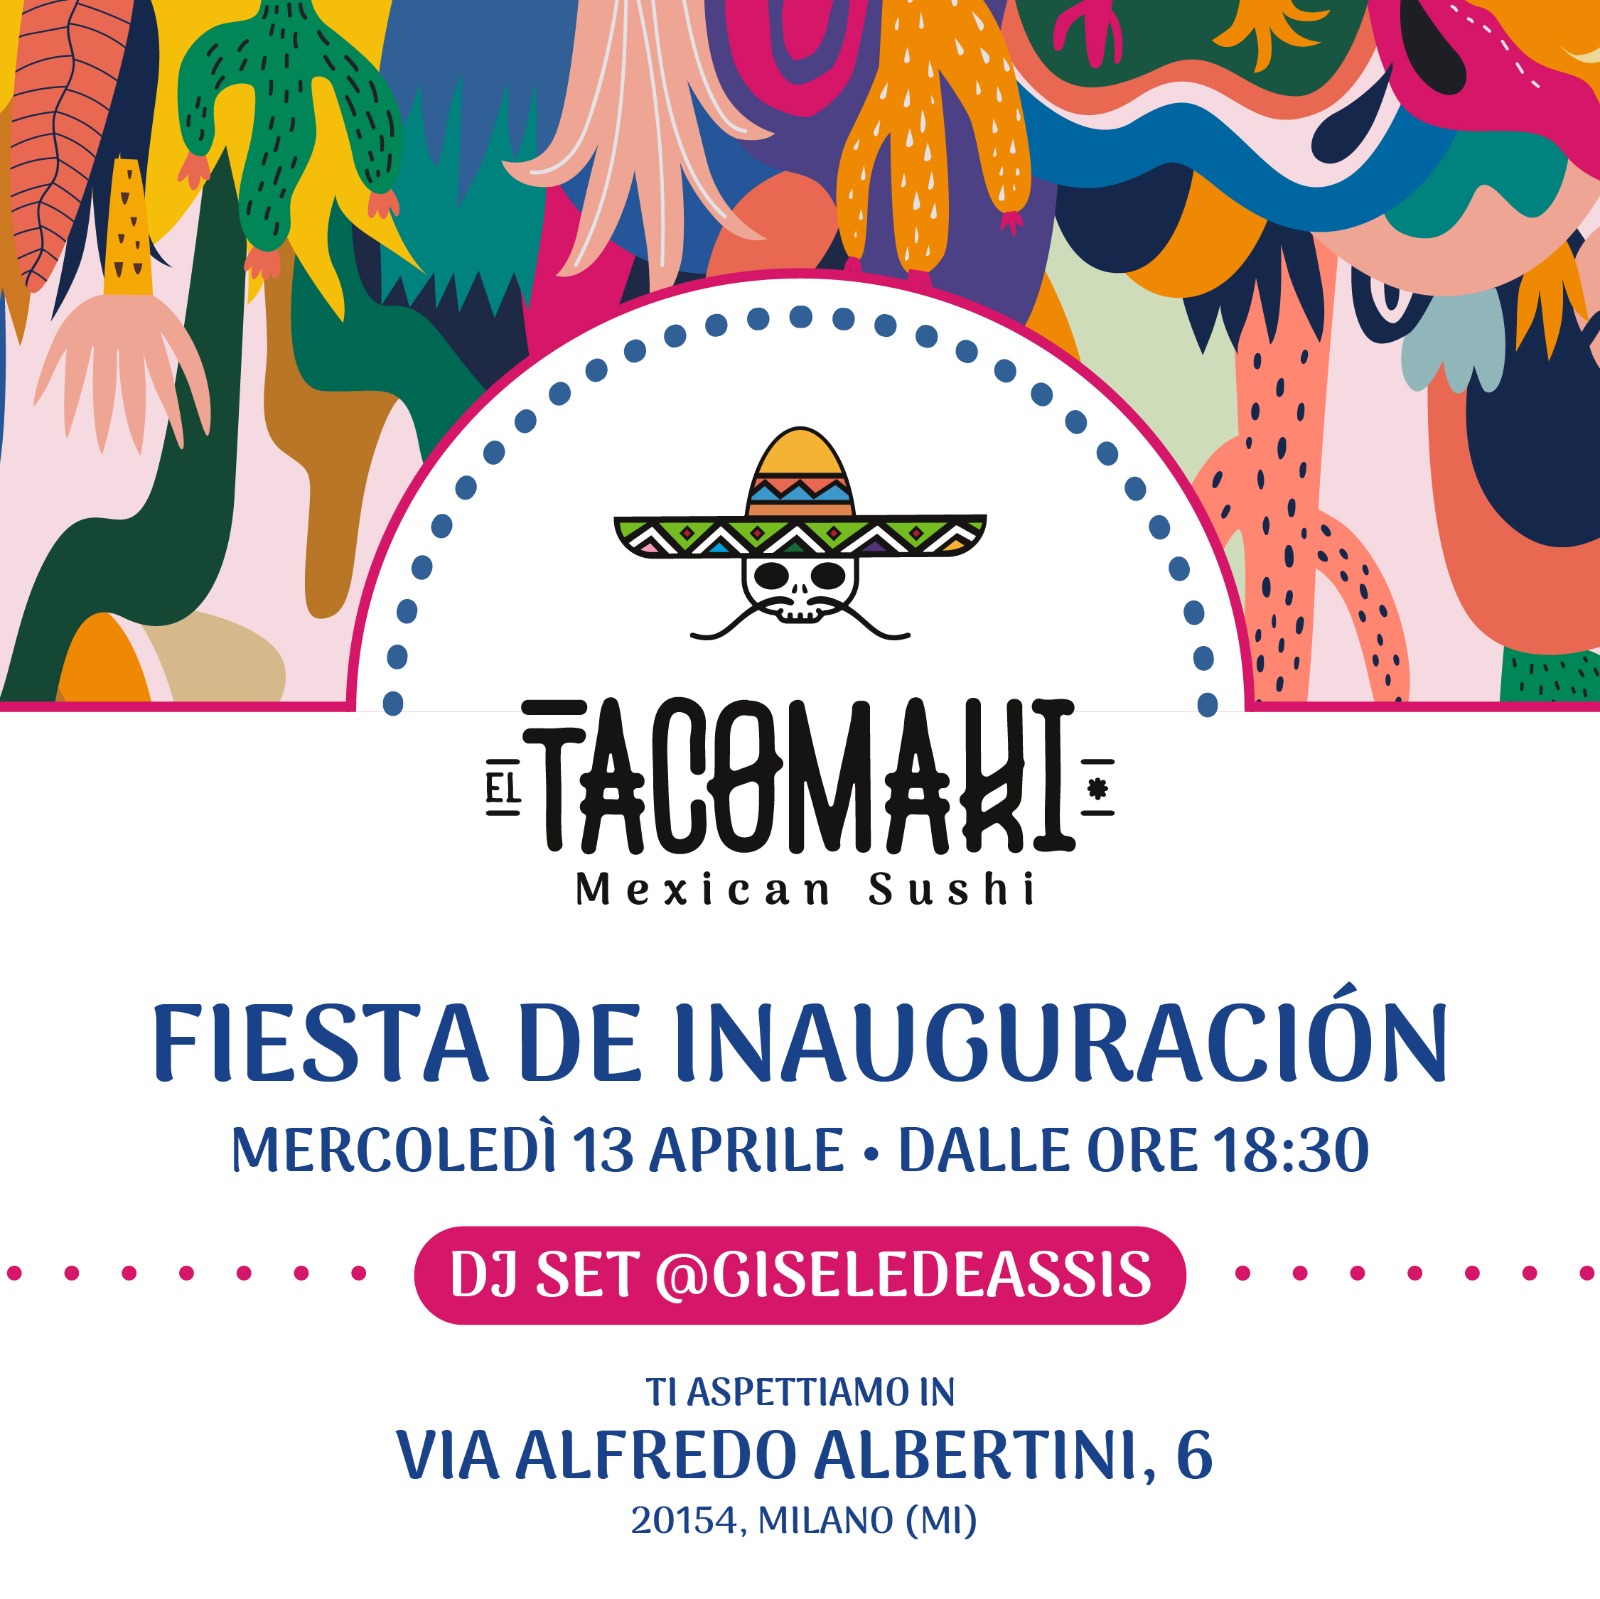 Fiesta de inauguración Tacomaki | via-alfredo-albertini |6 Mercoledì 13 Aprile